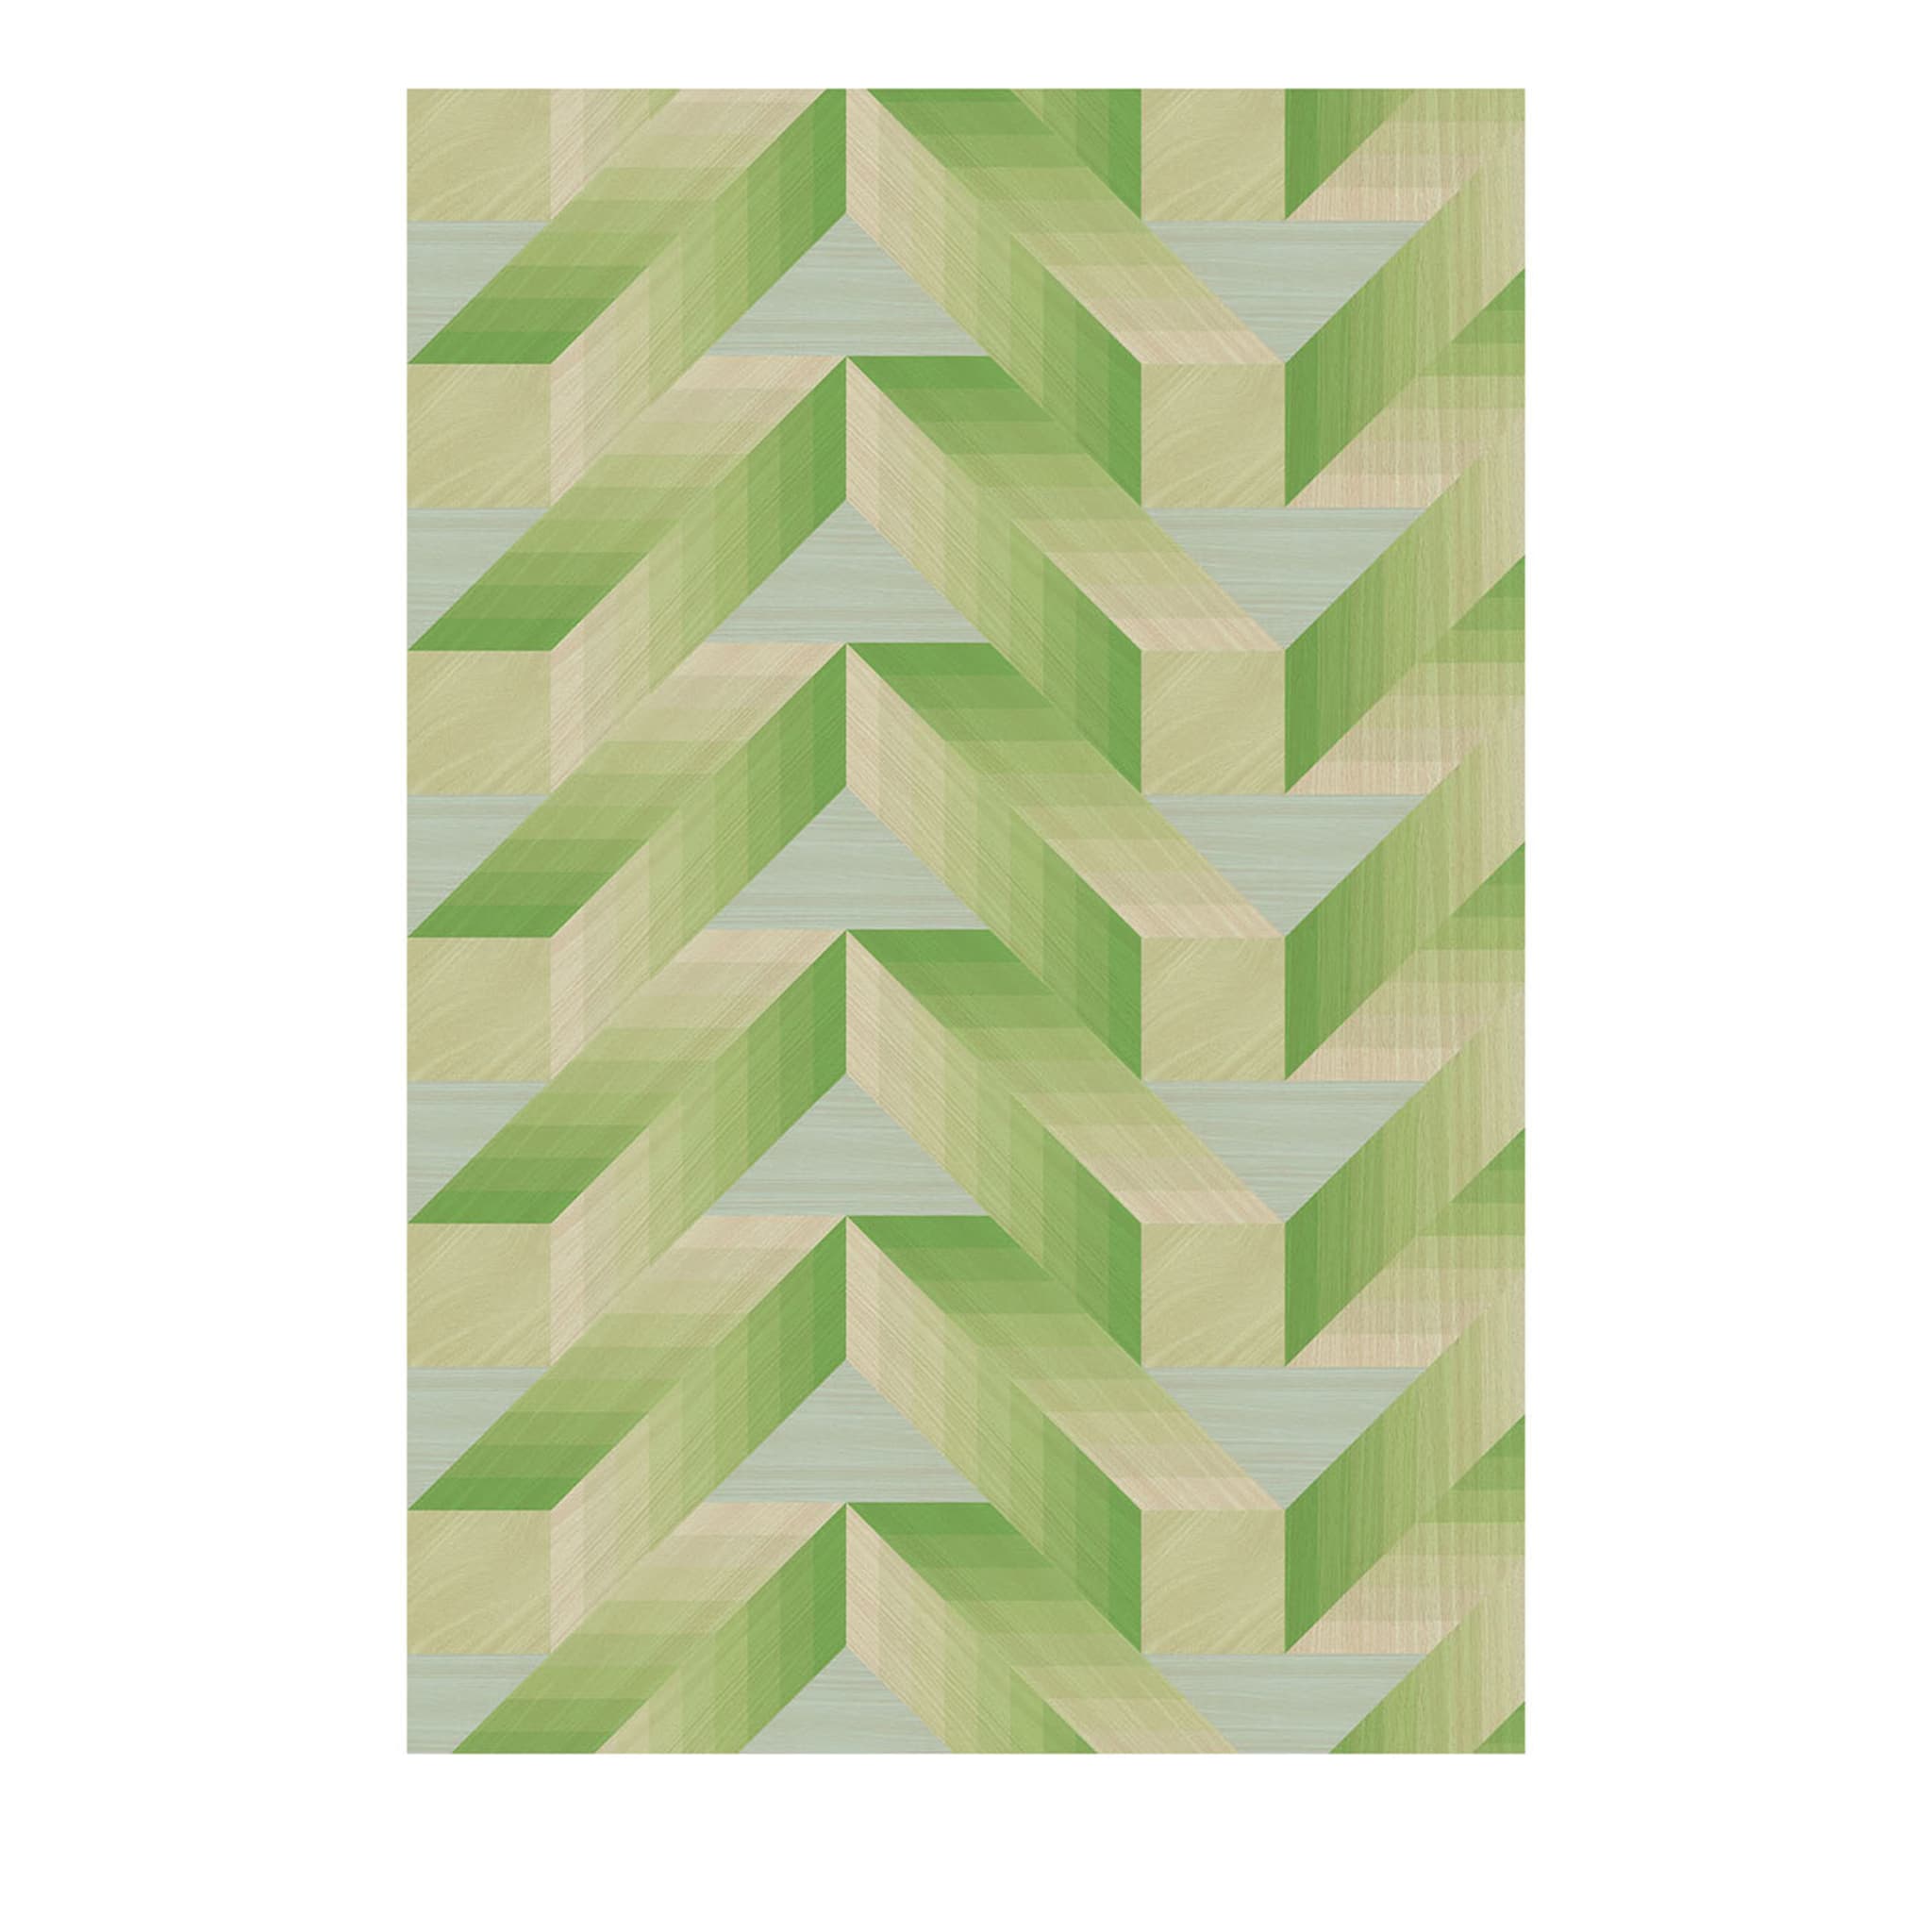 Geometry Cubes Green Wallpaper - Main view